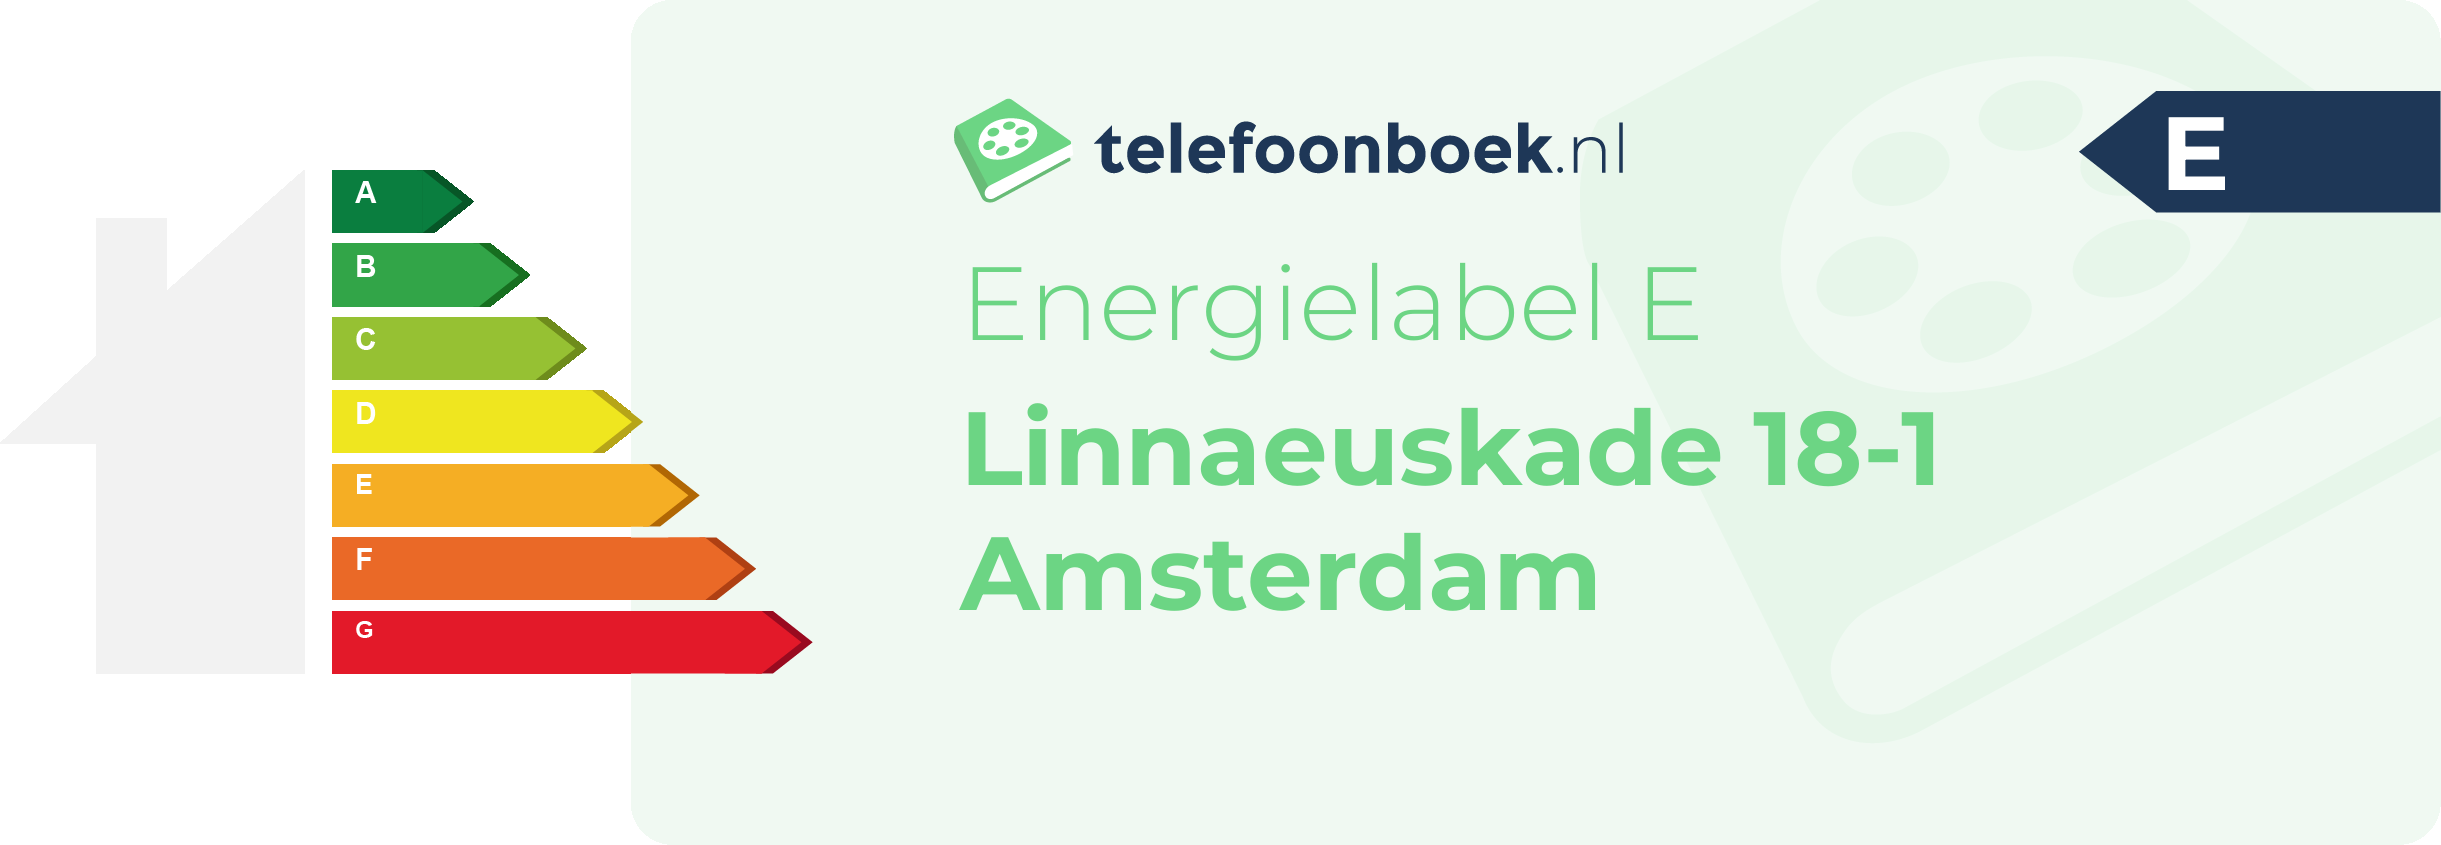 Energielabel Linnaeuskade 18-1 Amsterdam